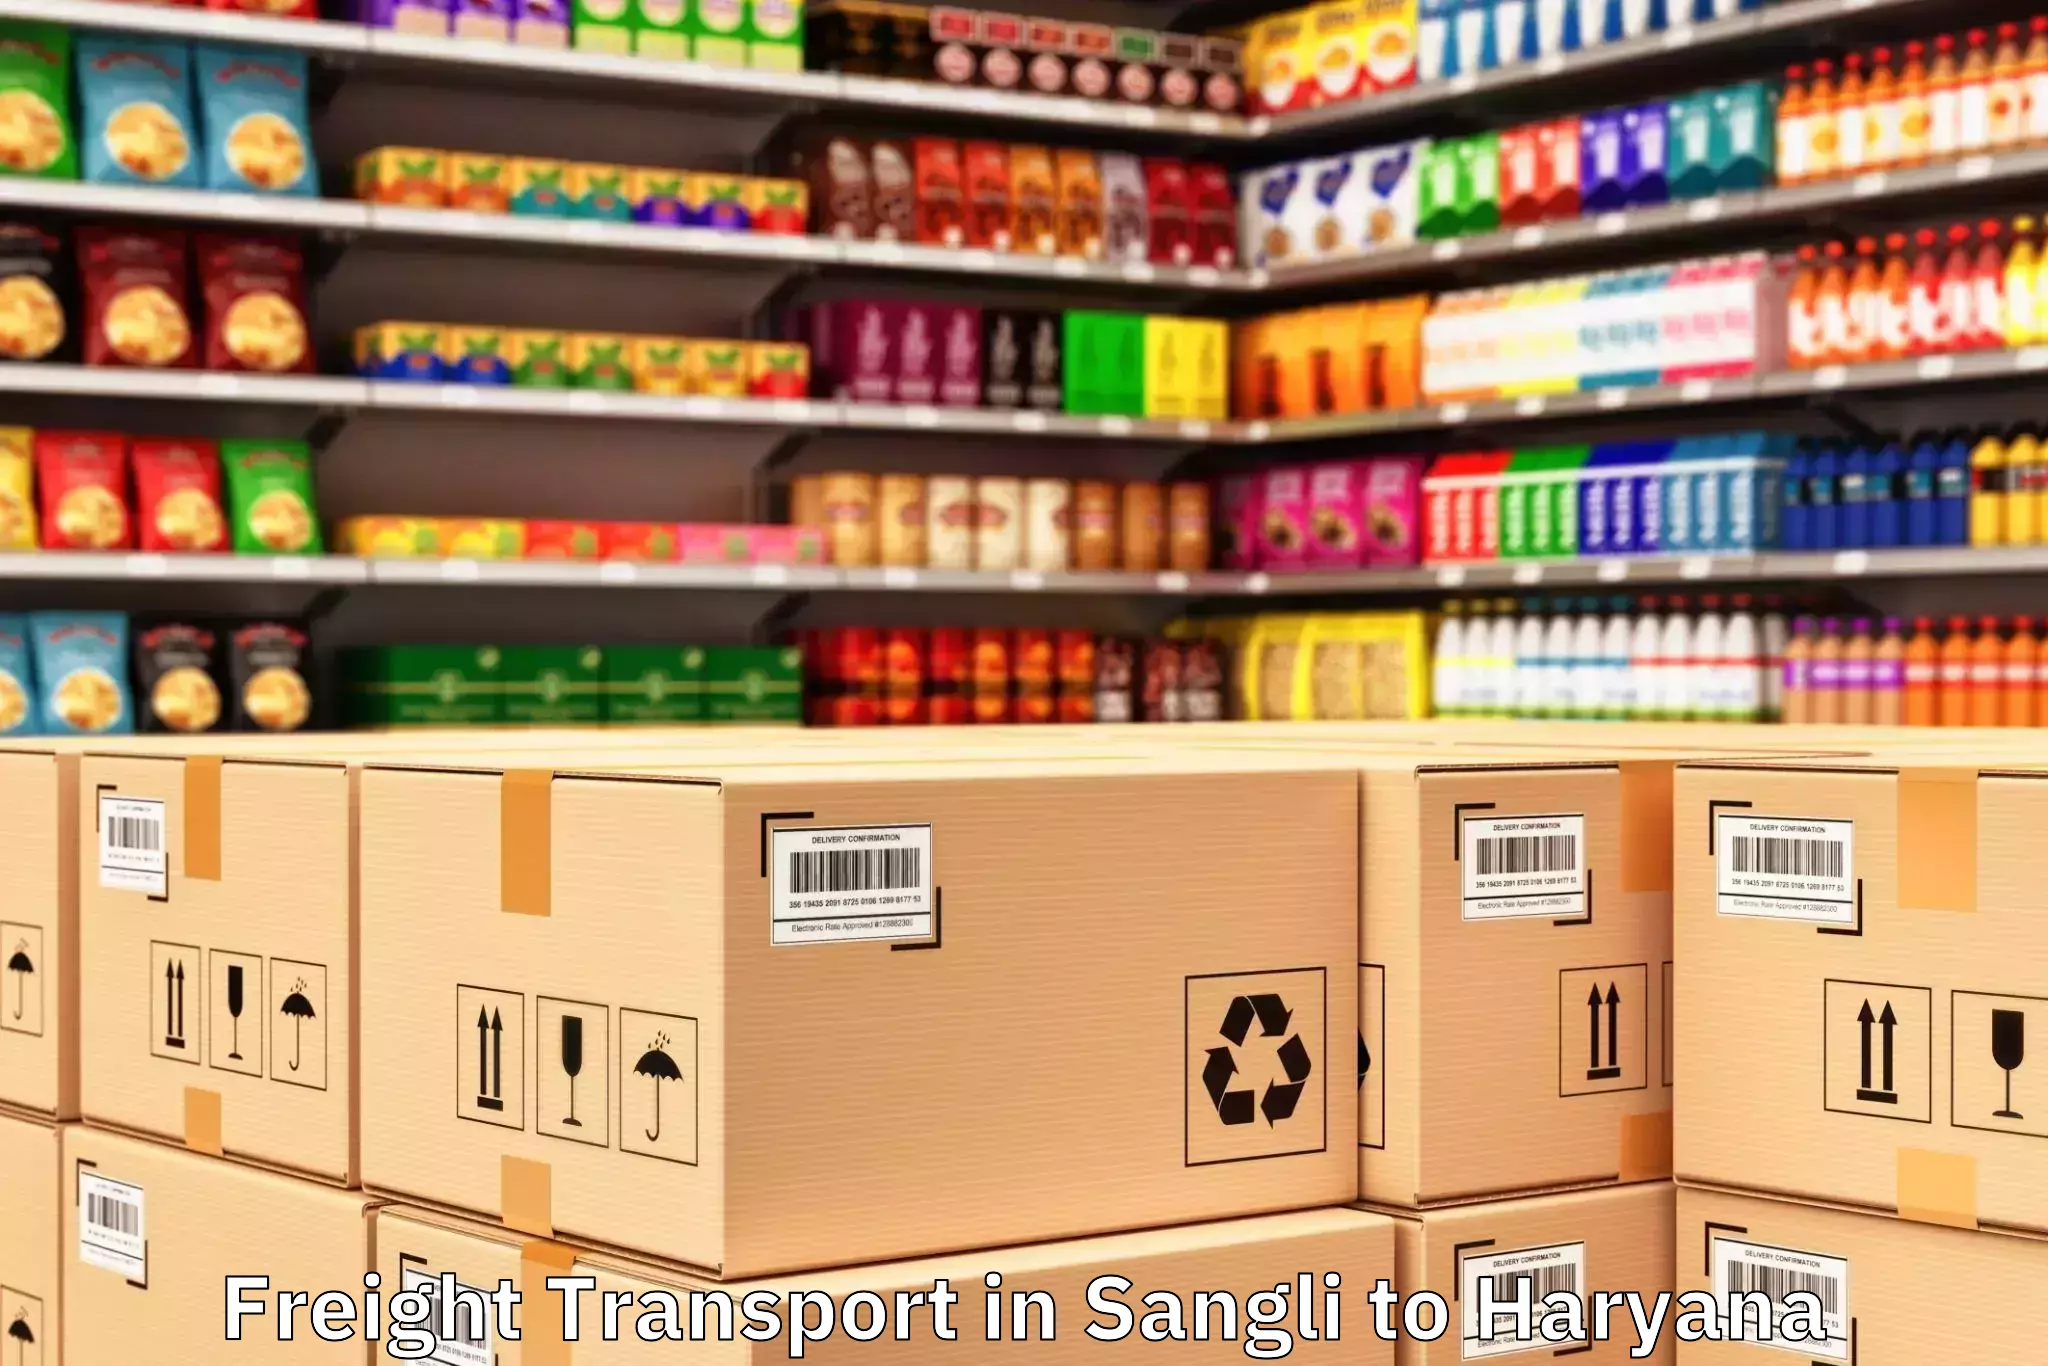 Easy Sangli to Panchkula Freight Transport Booking